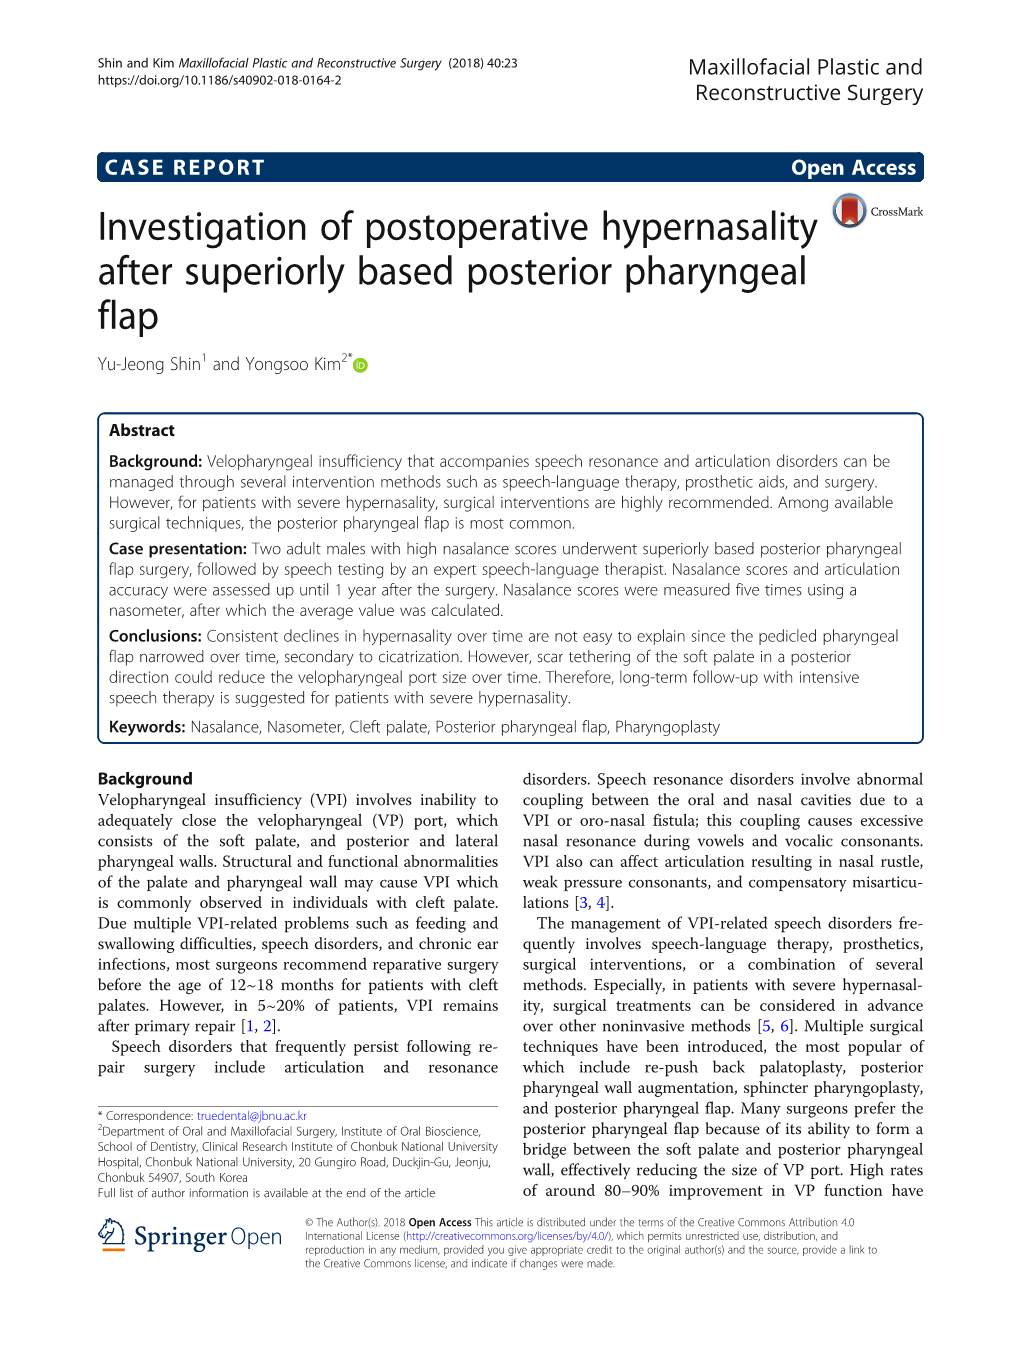 Investigation of Postoperative Hypernasality After Superiorly Based Posterior Pharyngeal Flap Yu-Jeong Shin1 and Yongsoo Kim2*